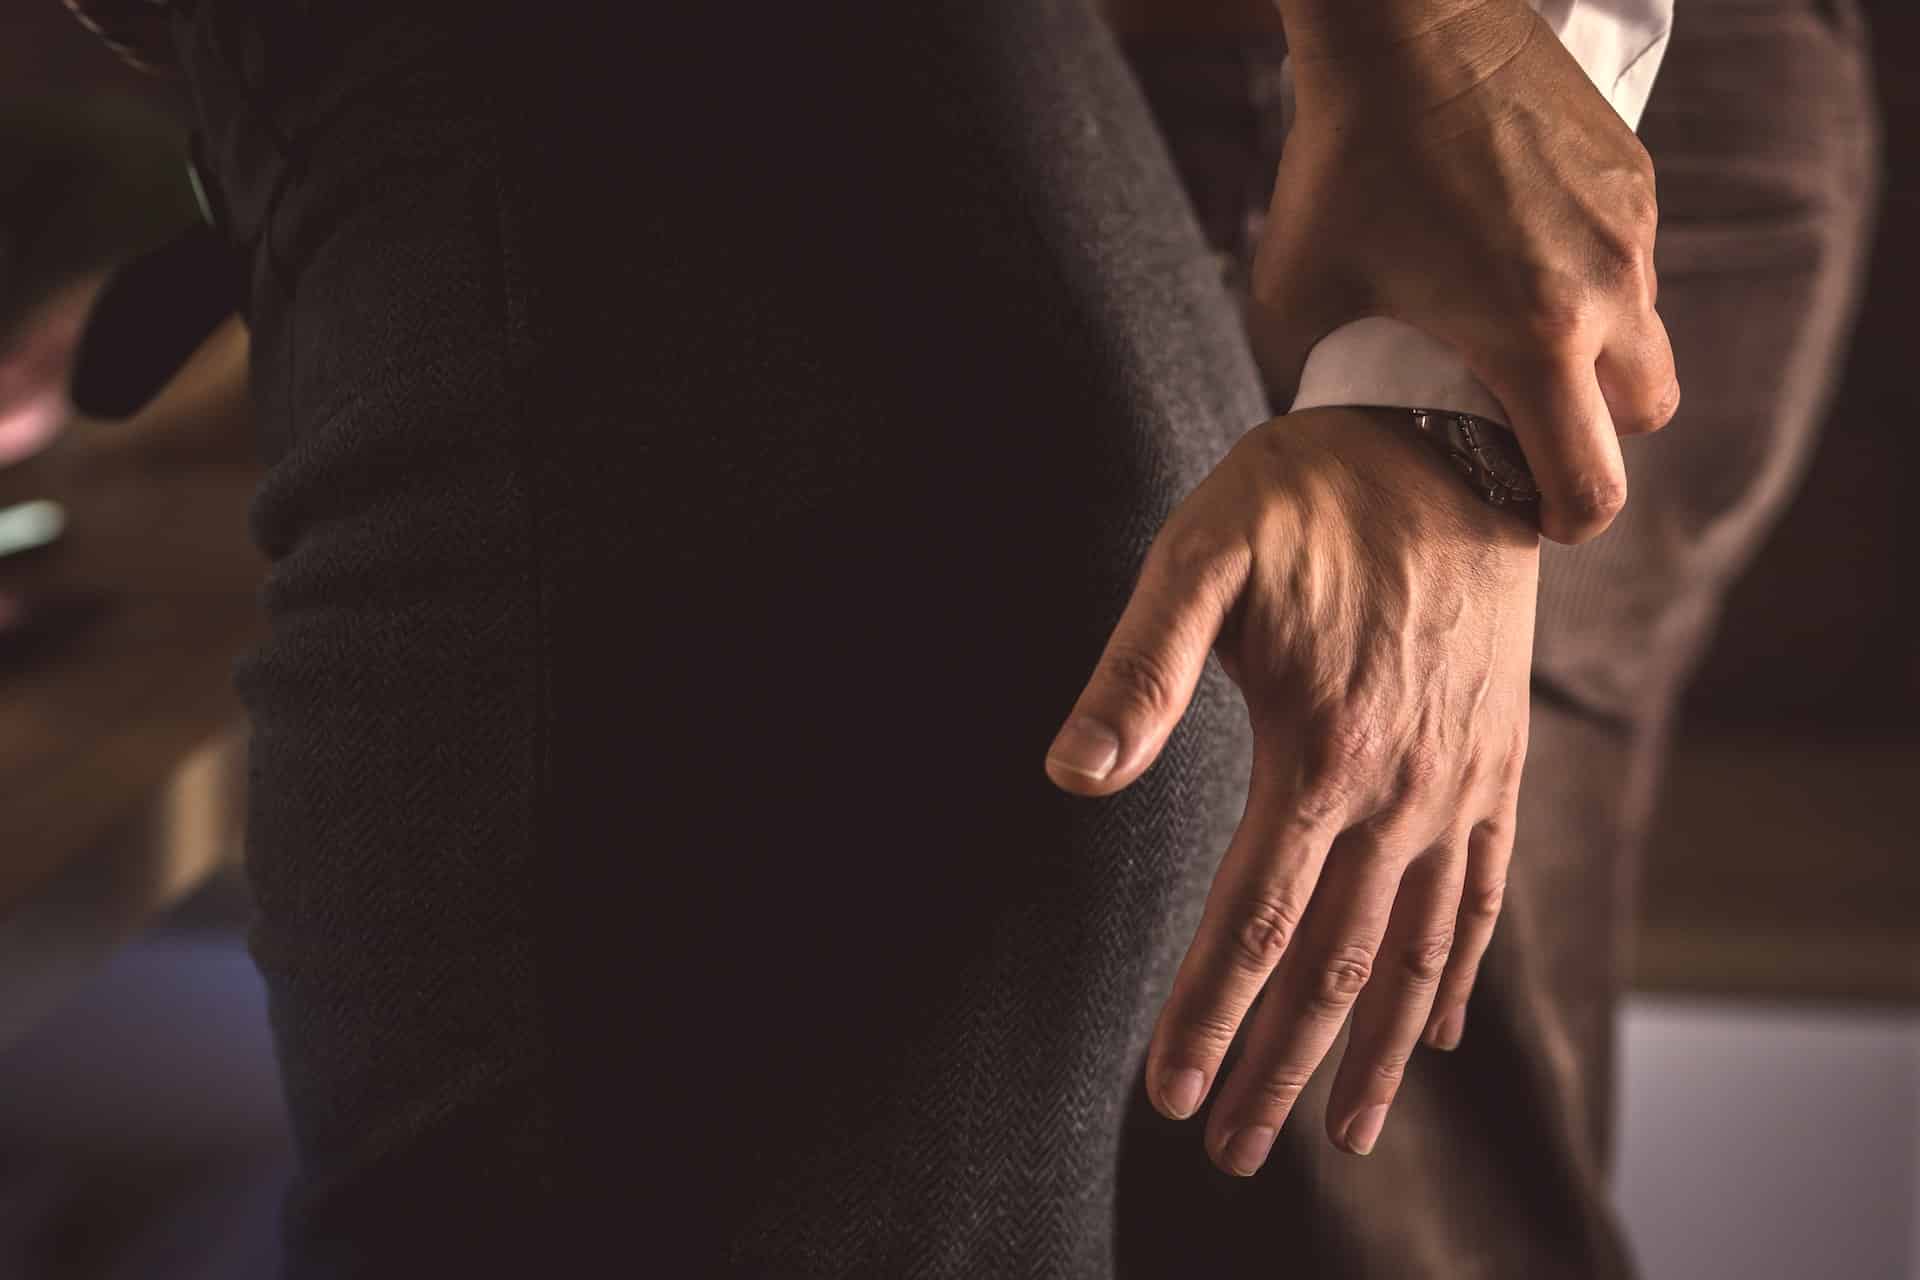 a man holding a woman's wrist